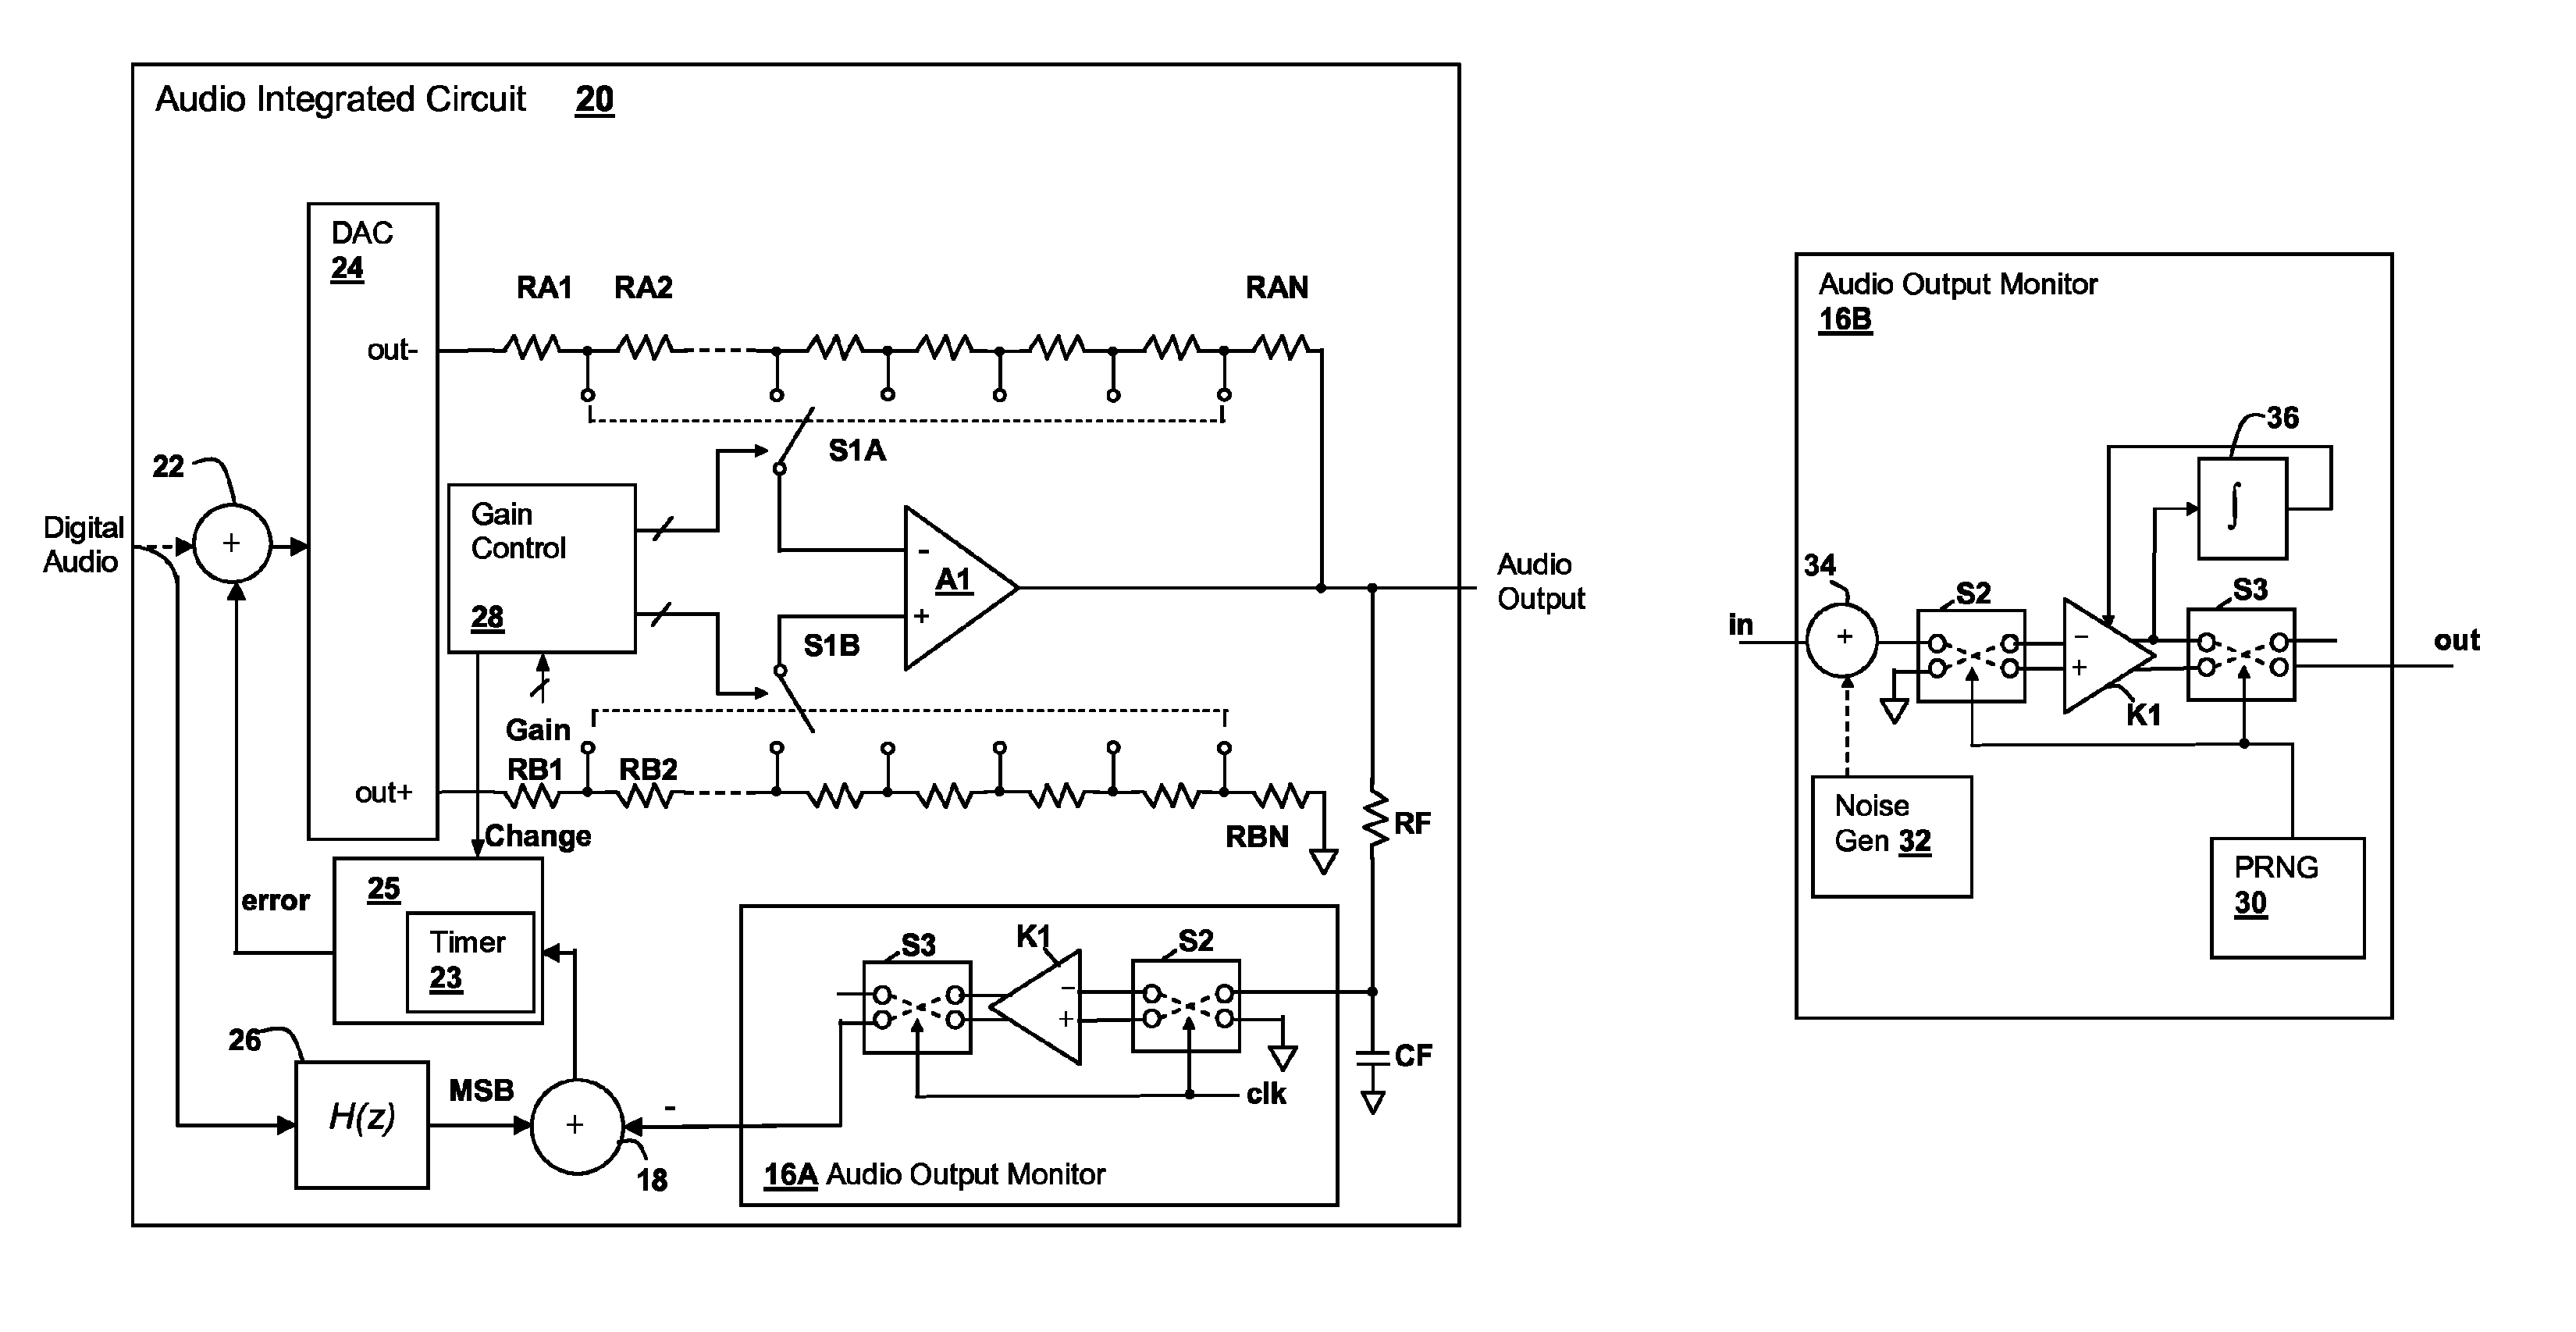 Audio amplifier offset reduction using digital input/output comparisons